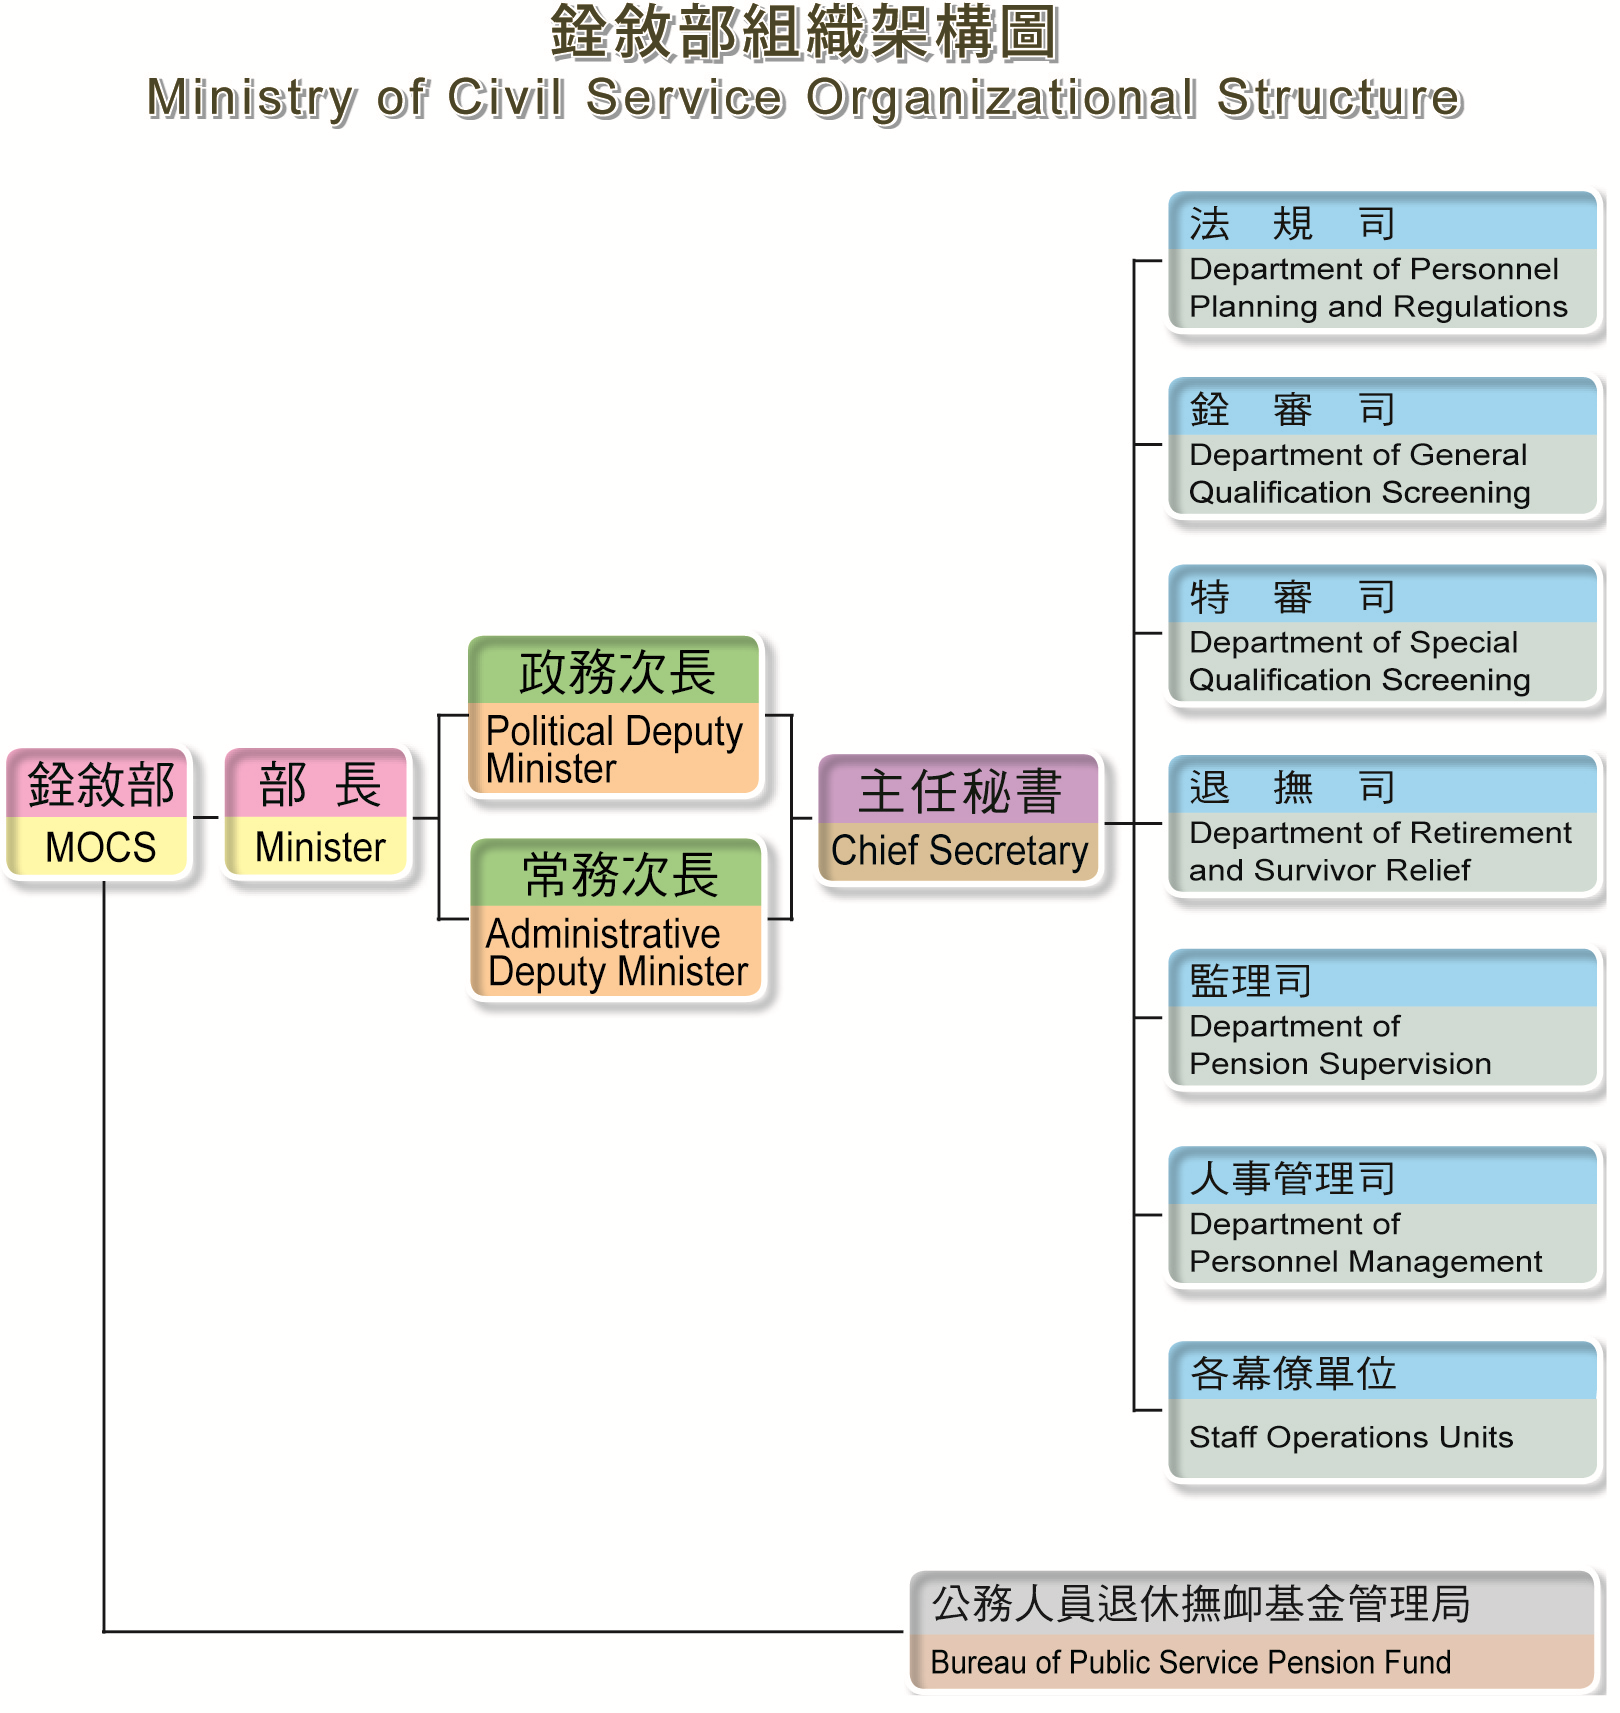 Organization map